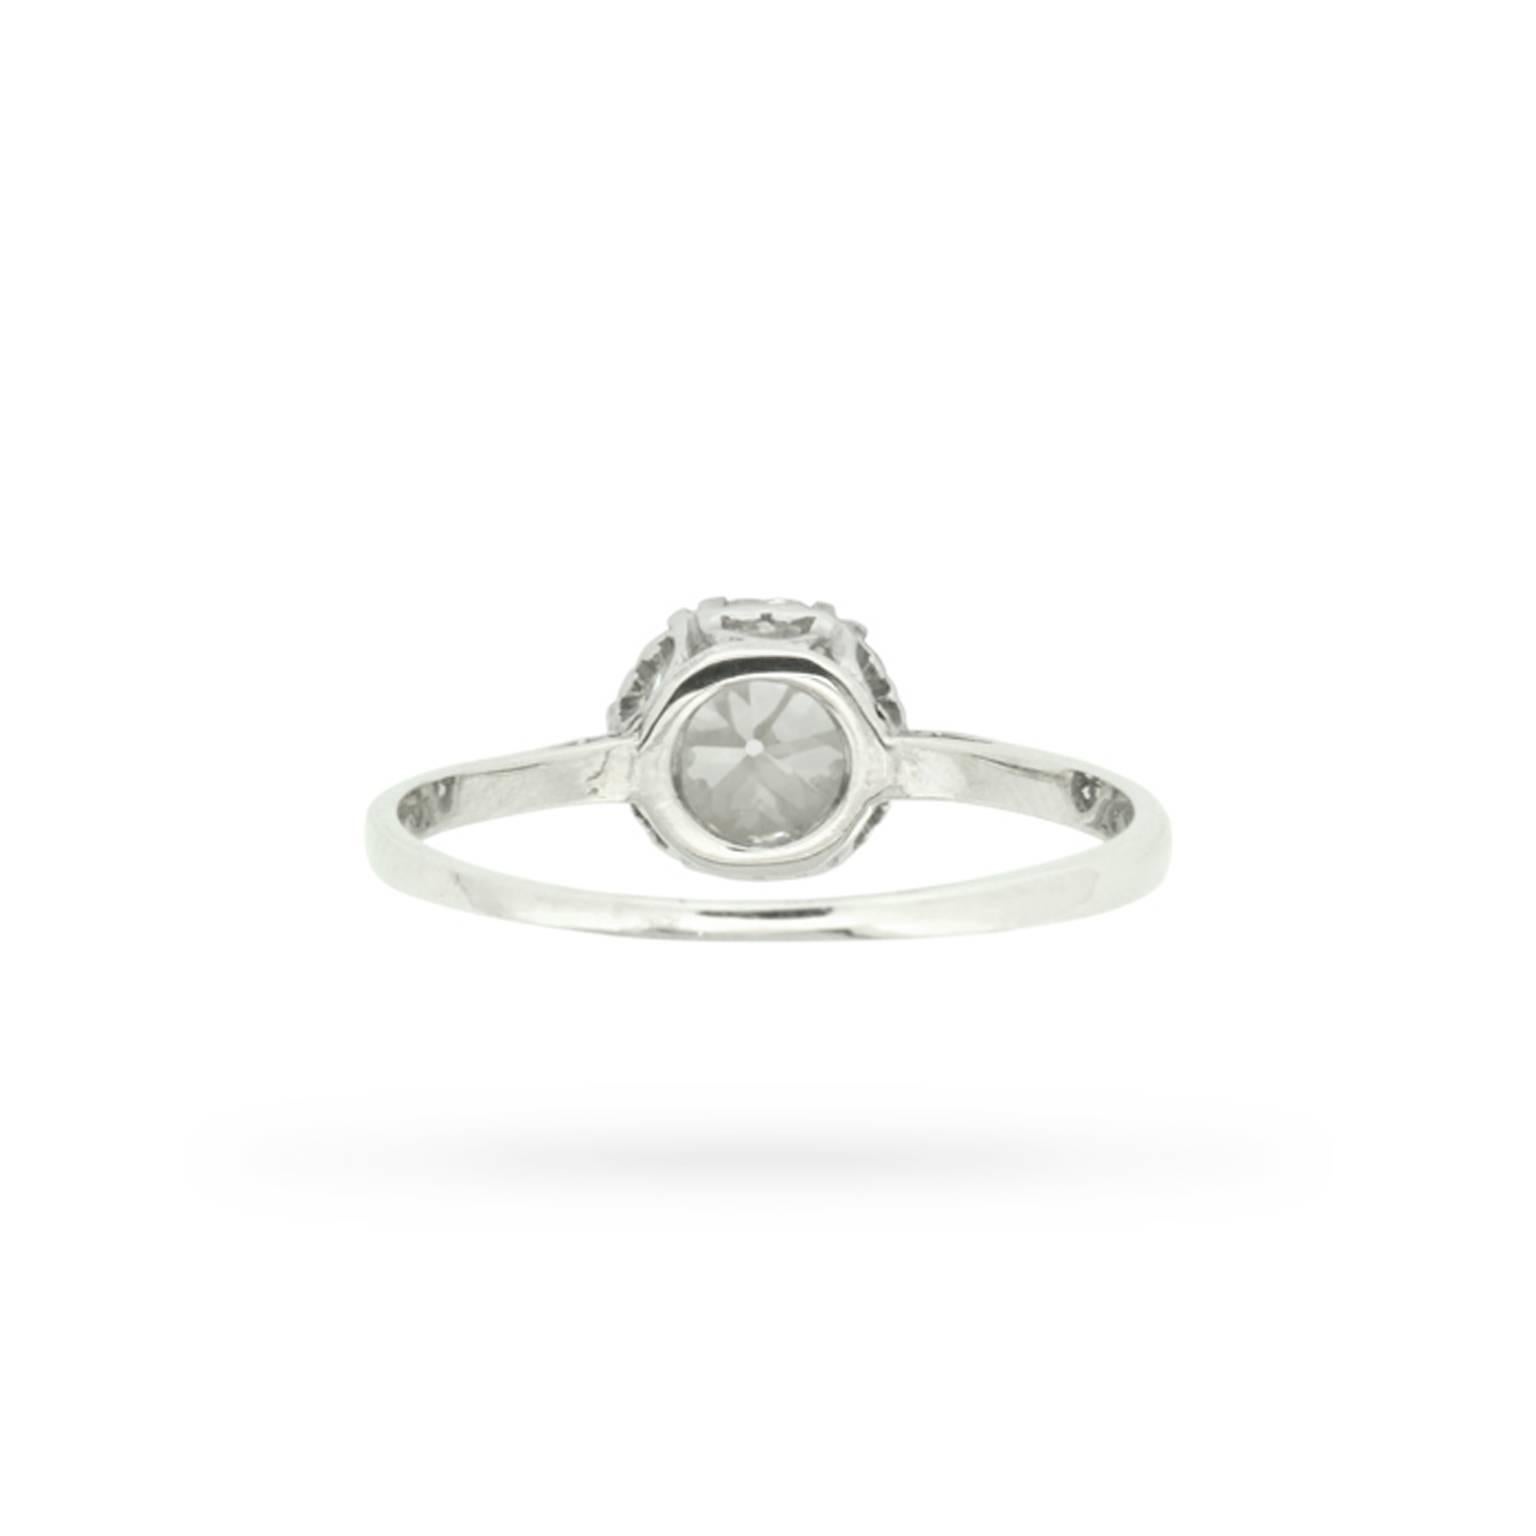 Women's or Men's Edwardian 1.04 Carat Old Cut Diamond Solitaire Engagement Ring circa 1910